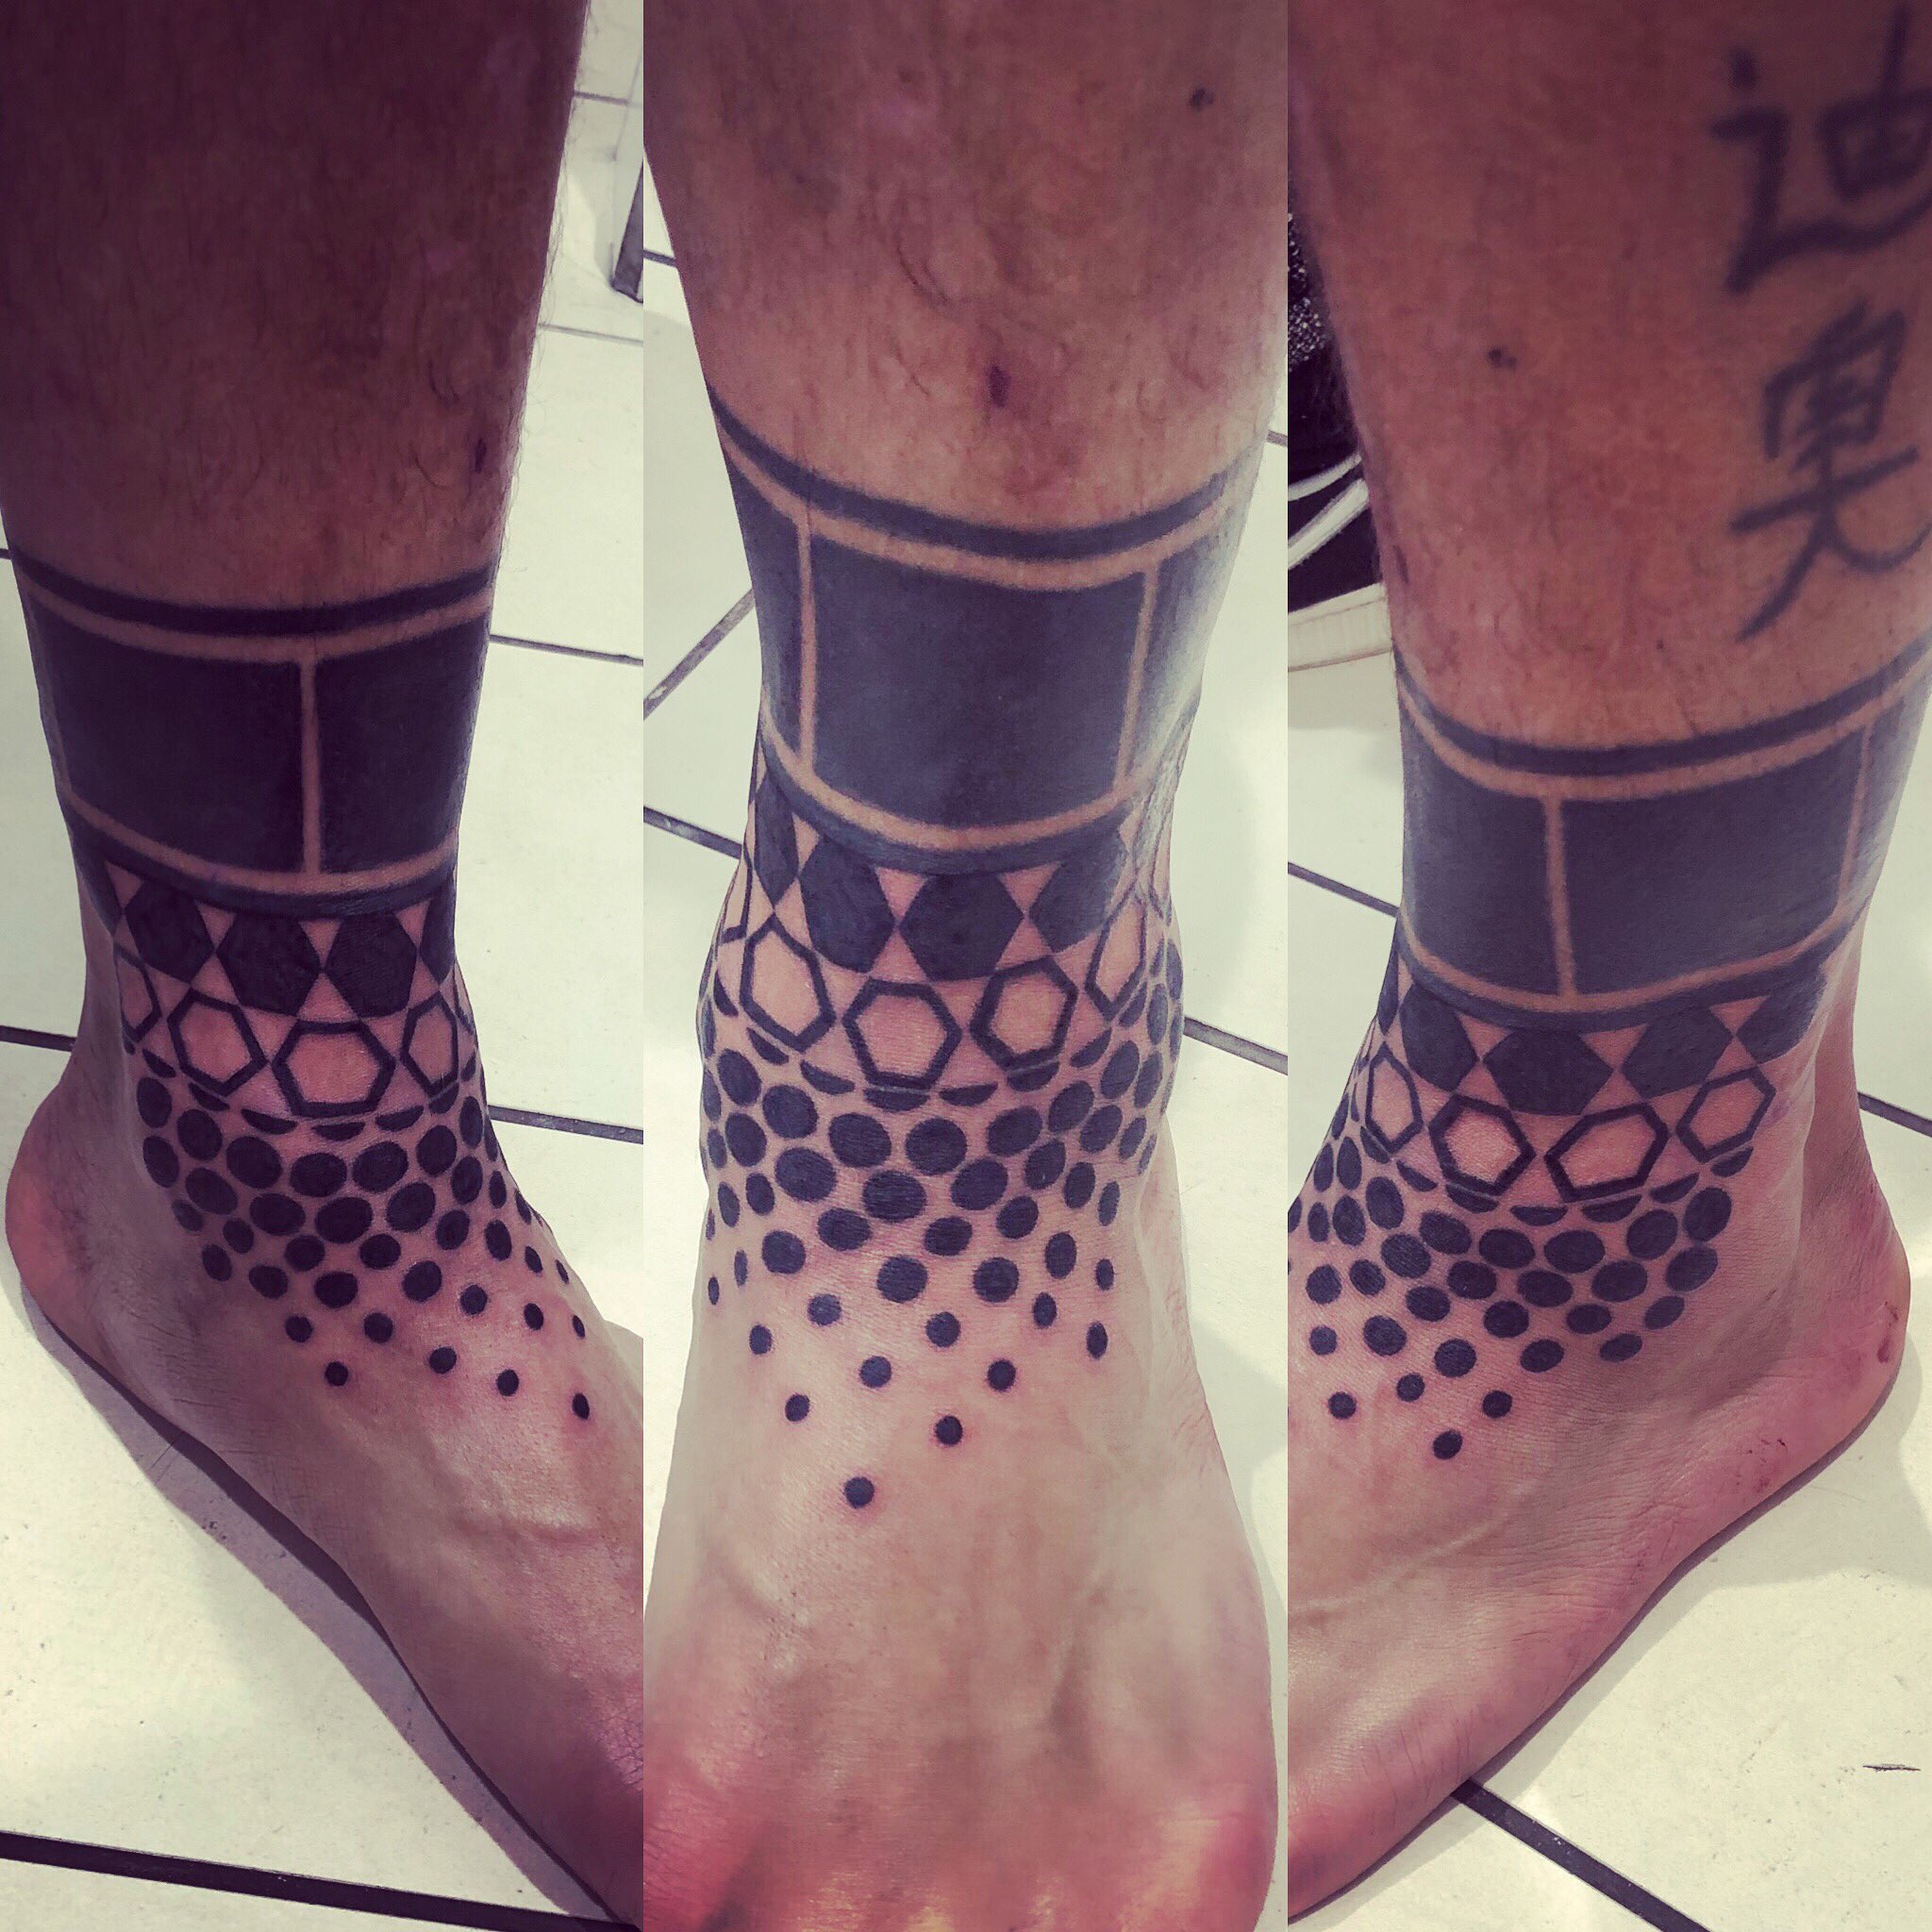 Tattoo tagged with: geometric shape, small, micro, line art, black, tiny,  ankle, rhombus, little, soltattoo, illustrative | inked-app.com